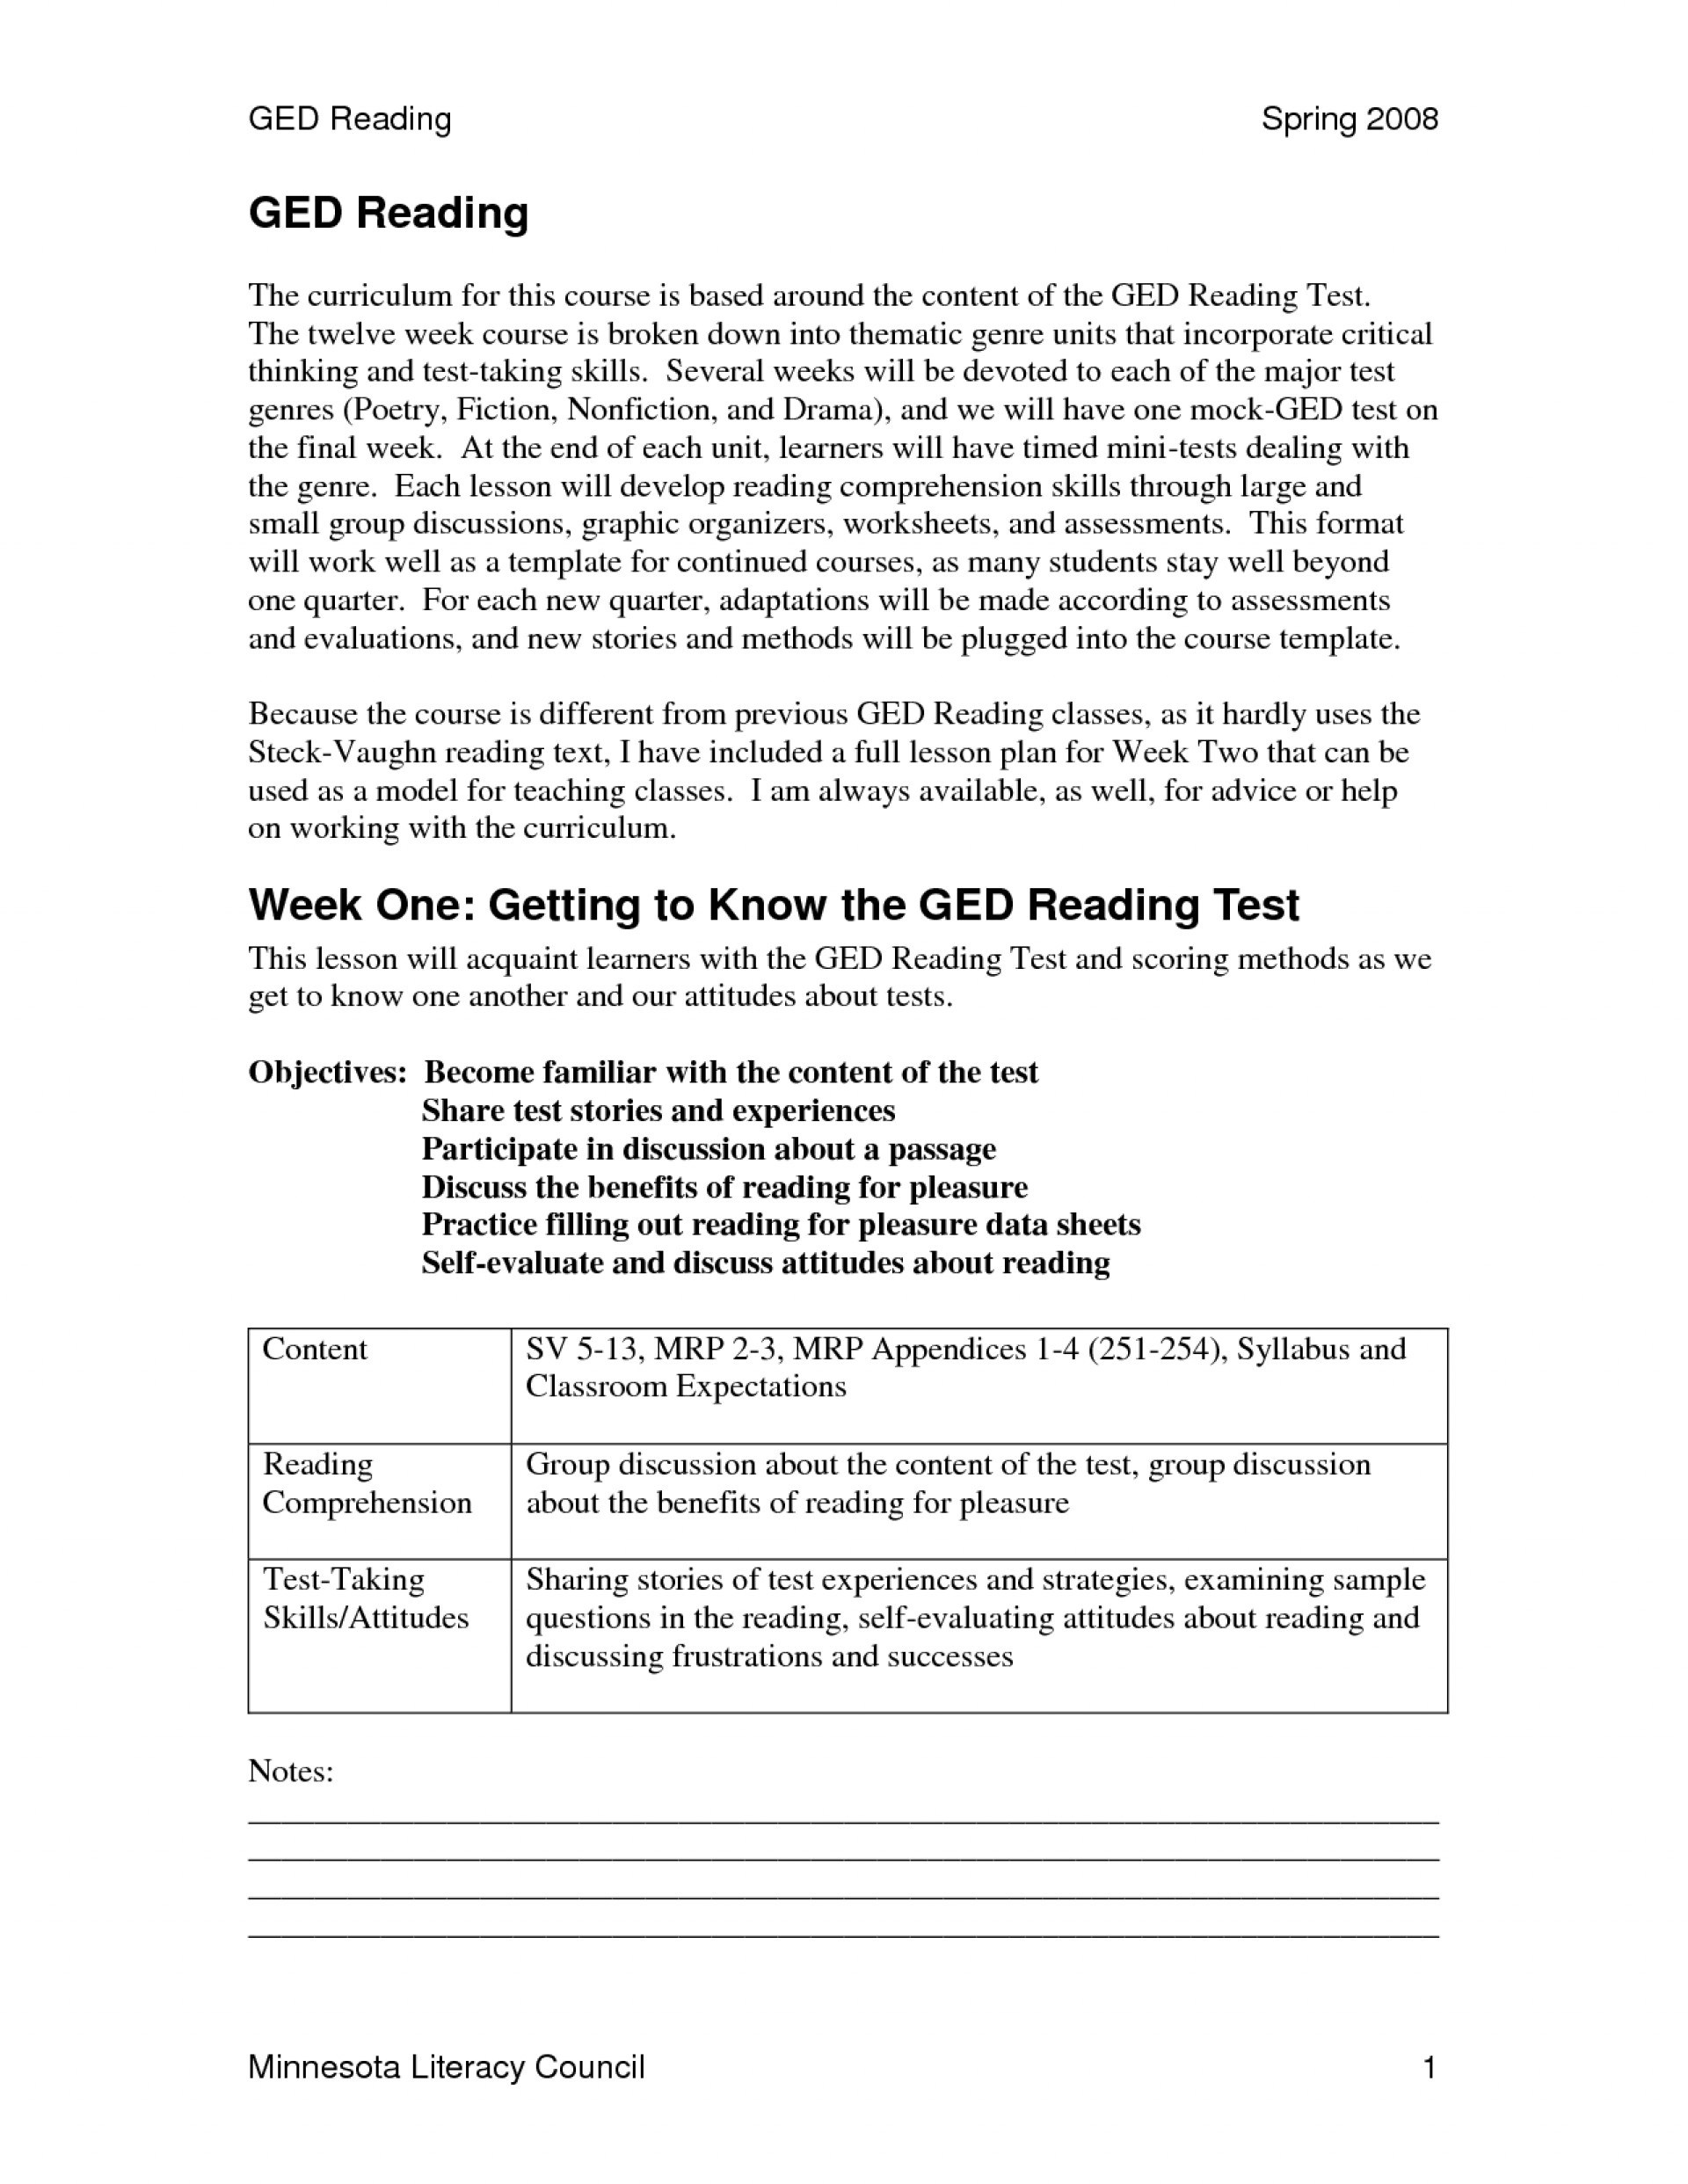 Ged Science Practice Test 2020 Pdf Resume Examples